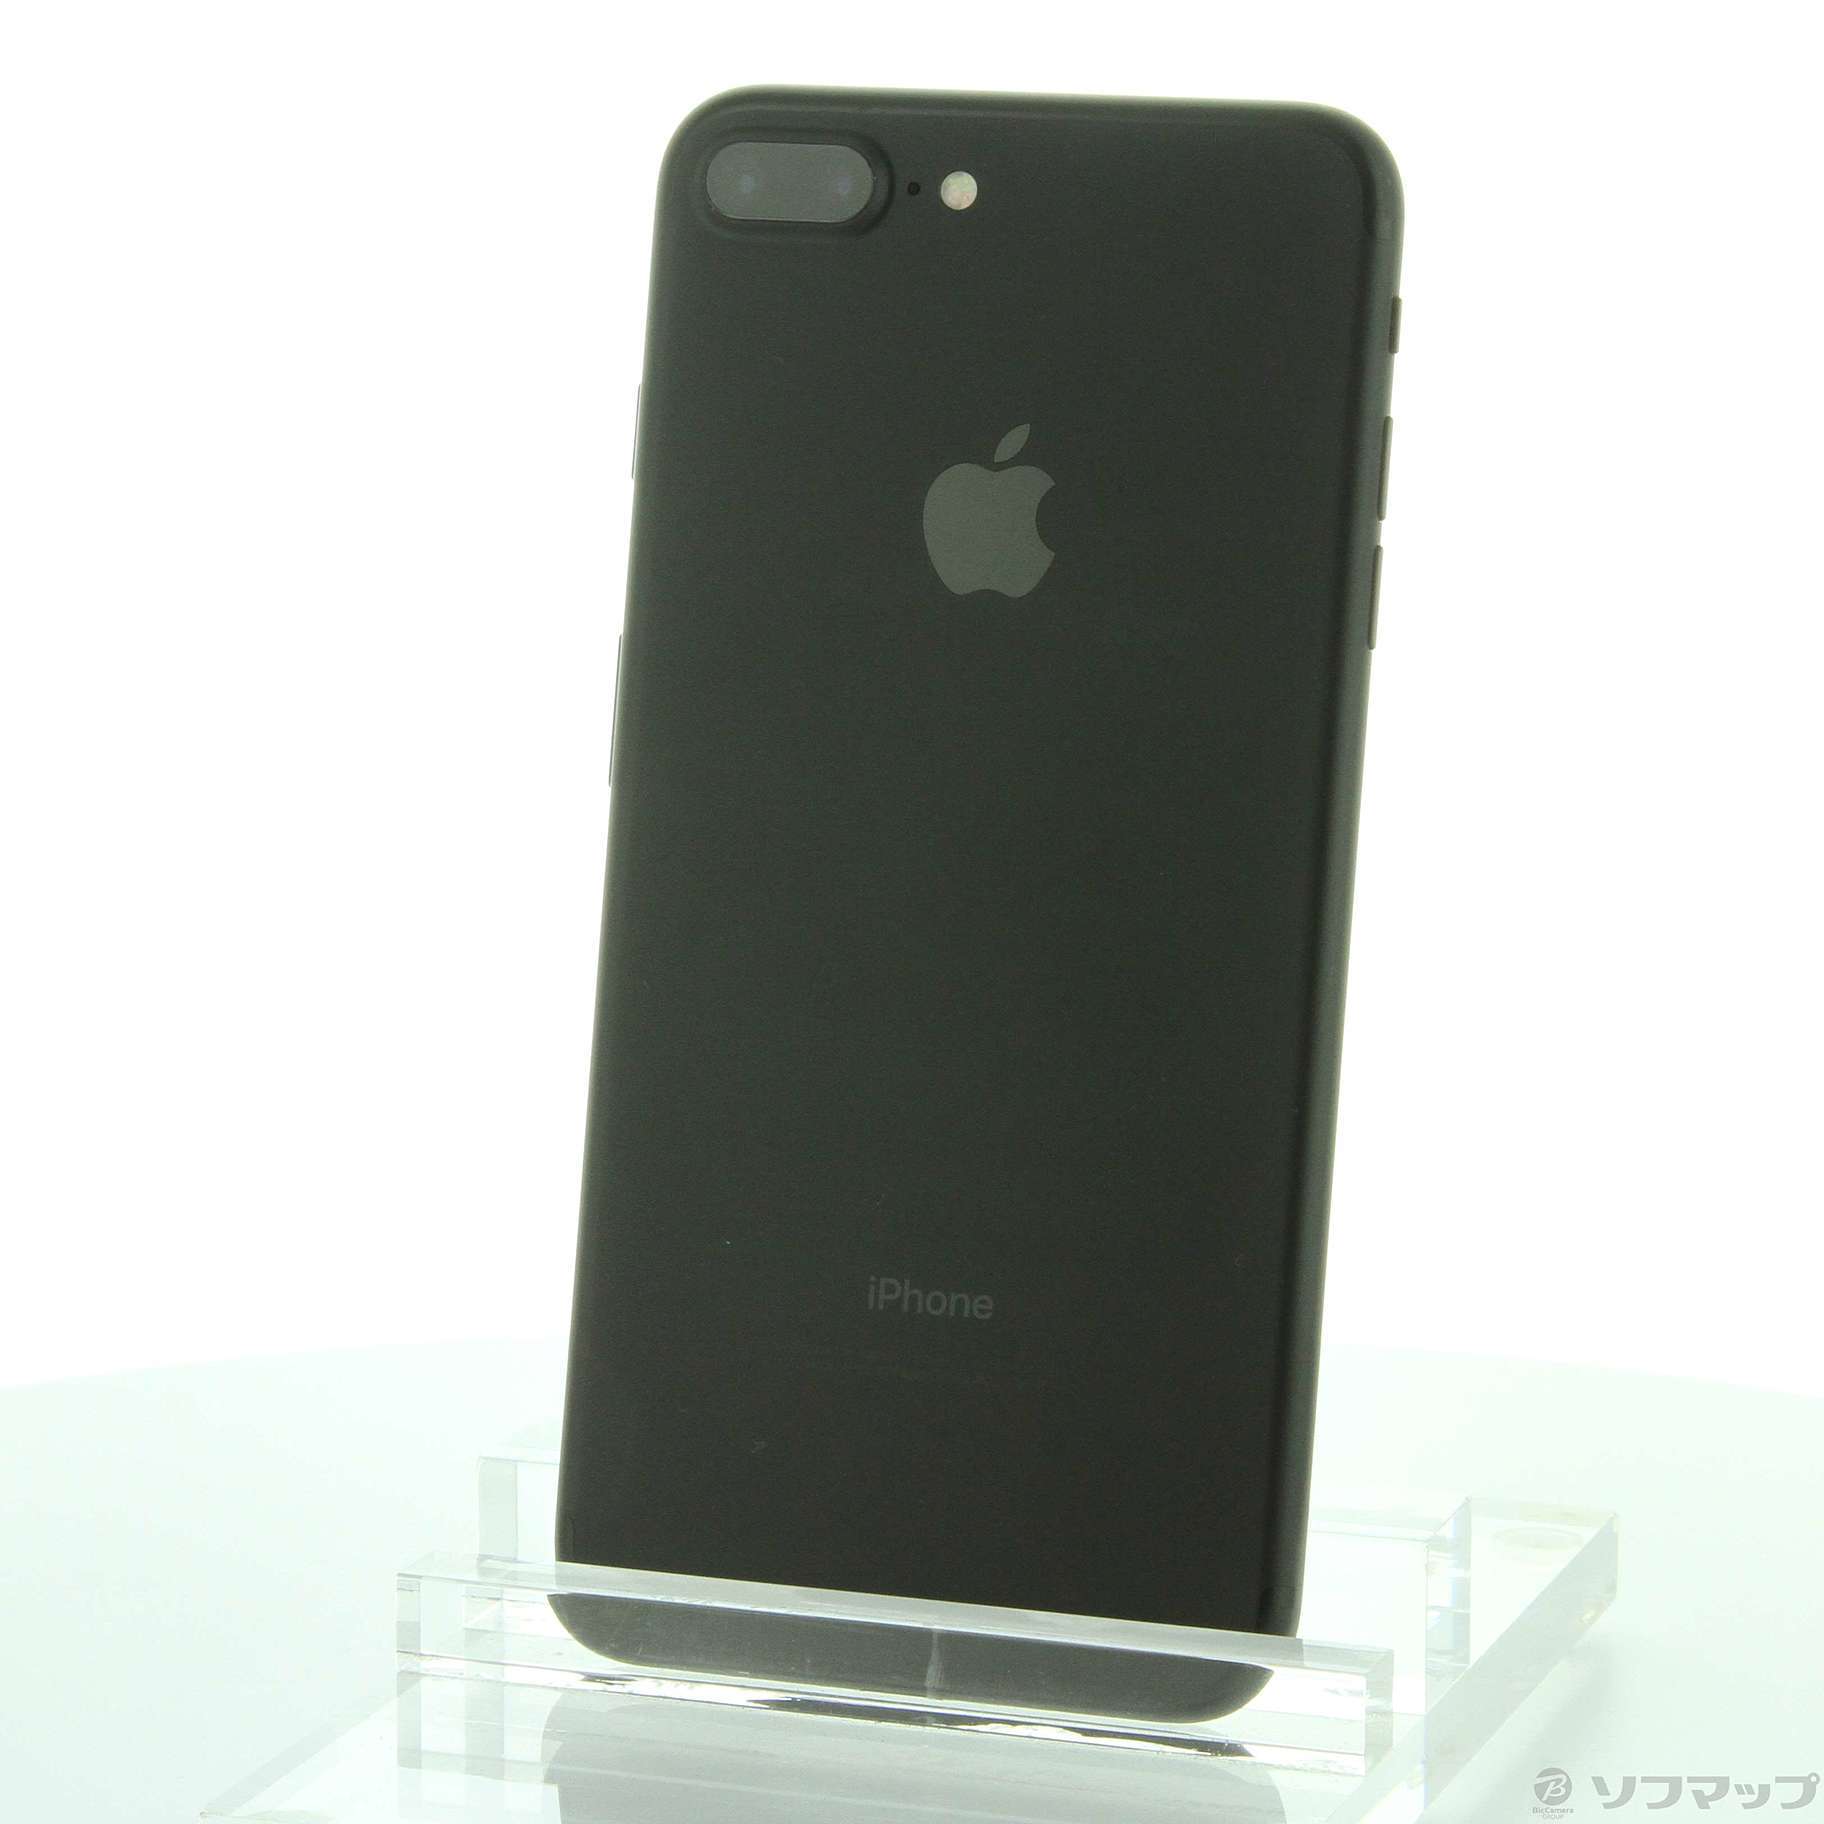 iPhone 7 Jet Black 32 GB au - スマートフォン本体